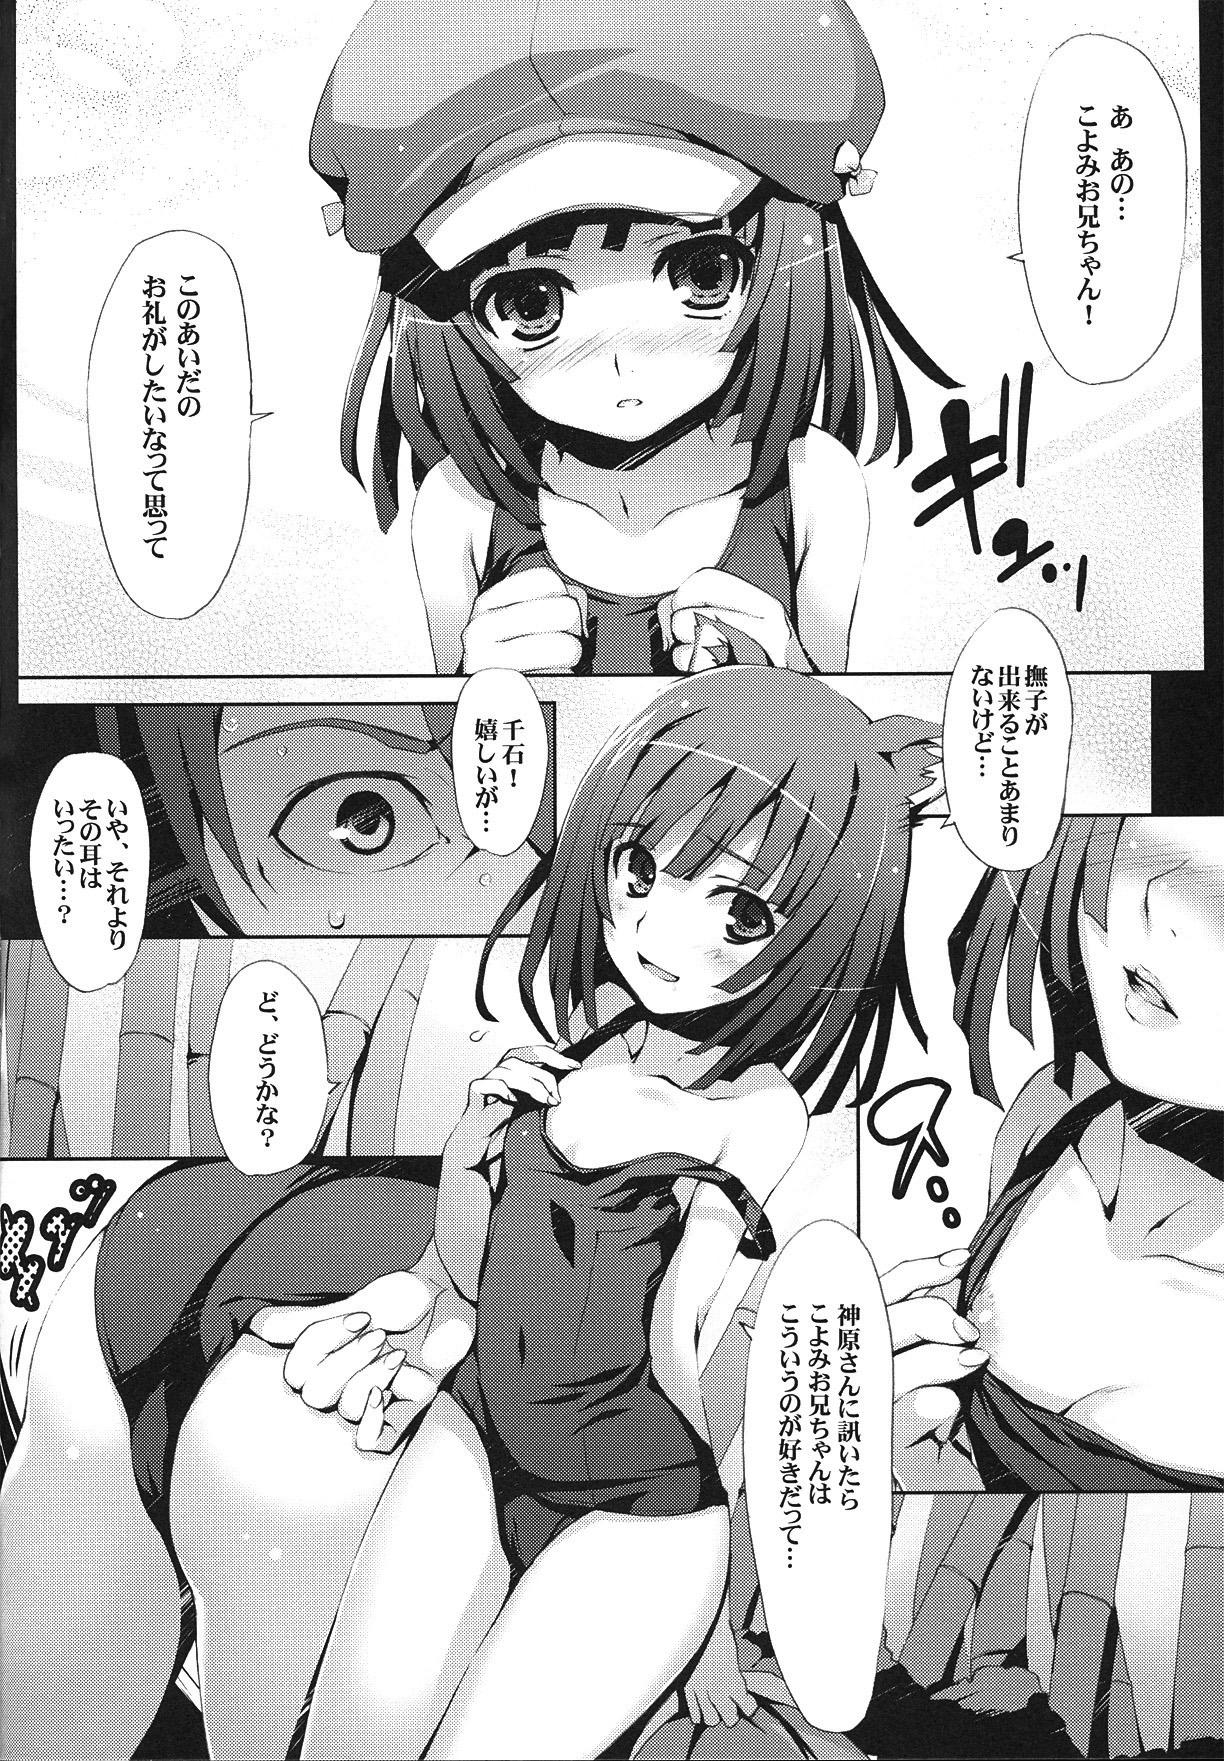 Longhair Kaii no Shiwaza - Bakemonogatari Virgin - Page 7